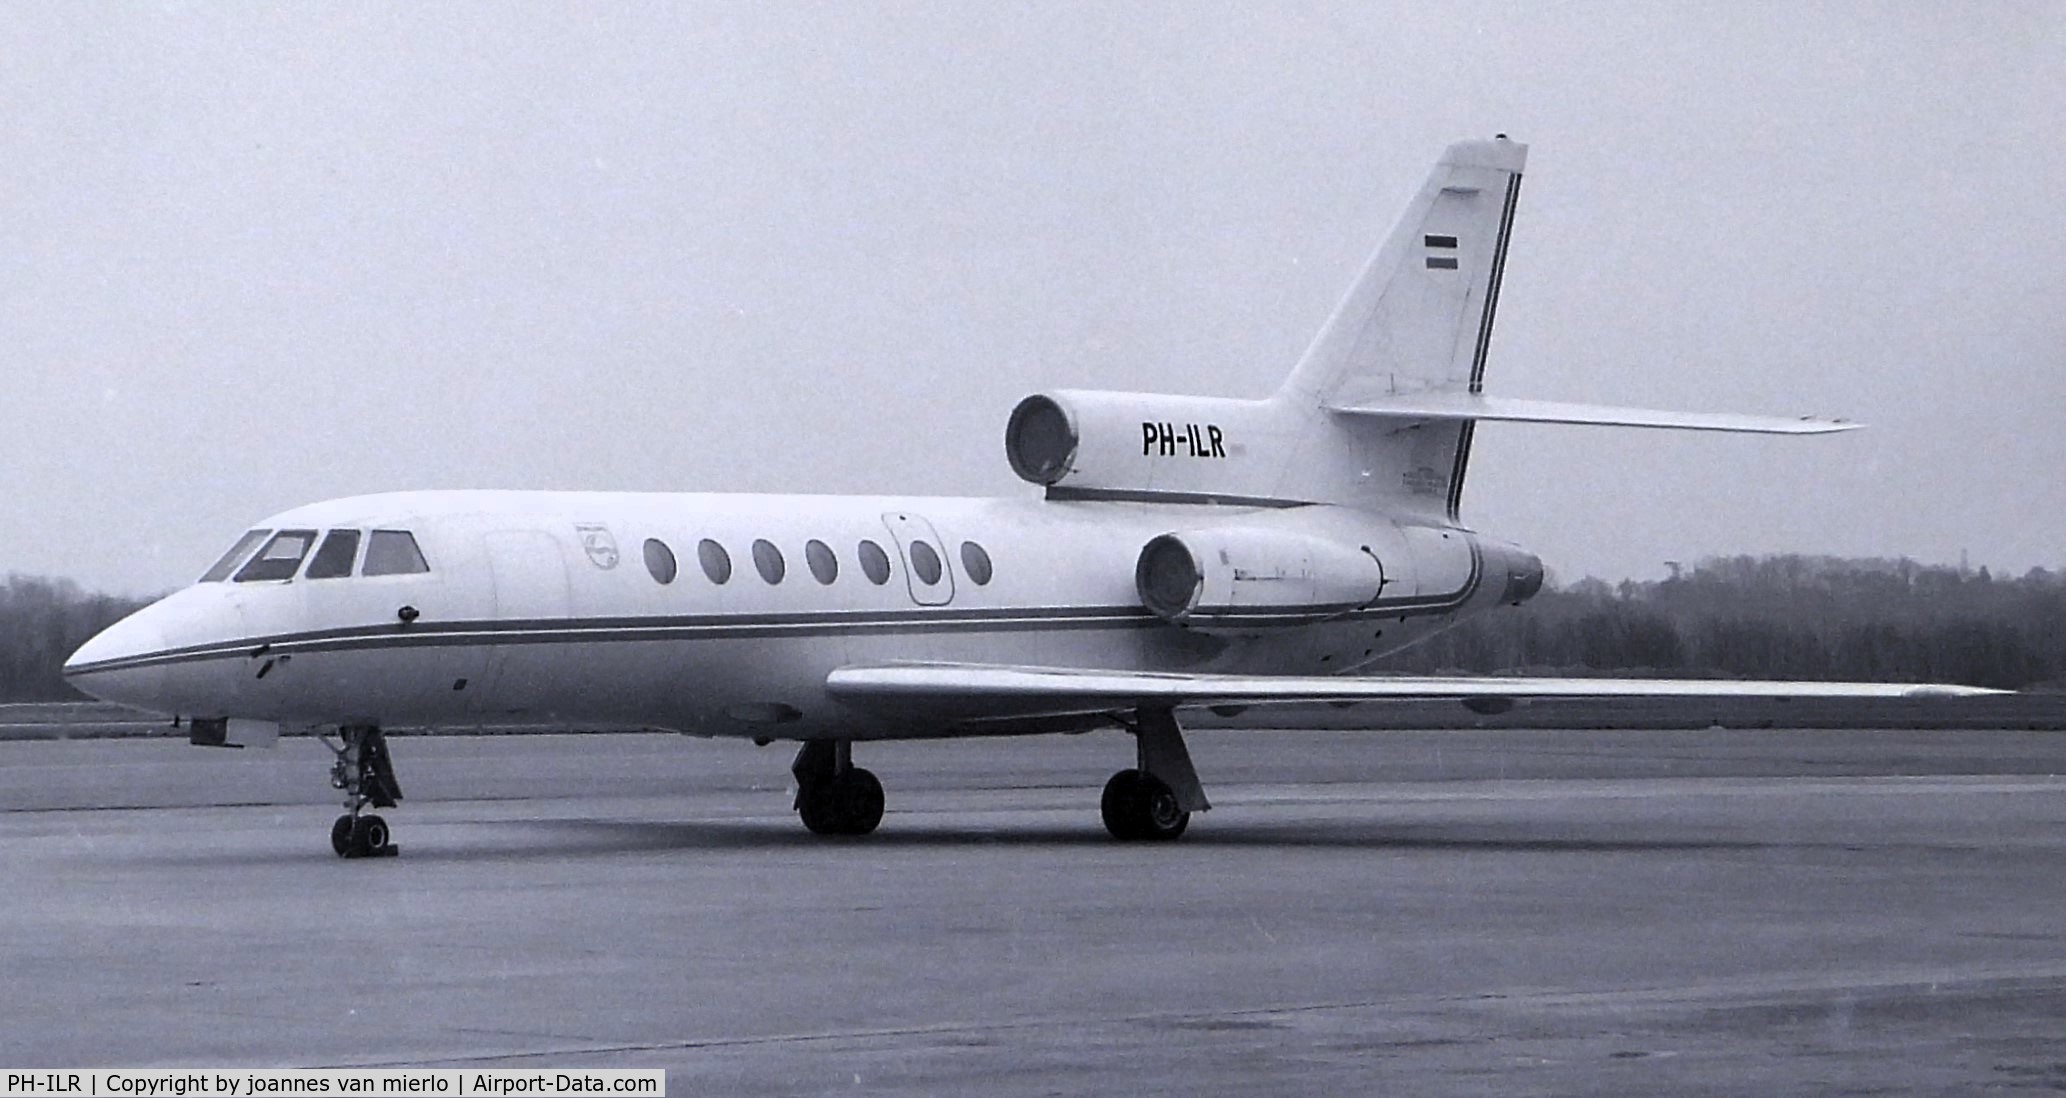 PH-ILR, Dassault Falcon 50 C/N 15, Philips